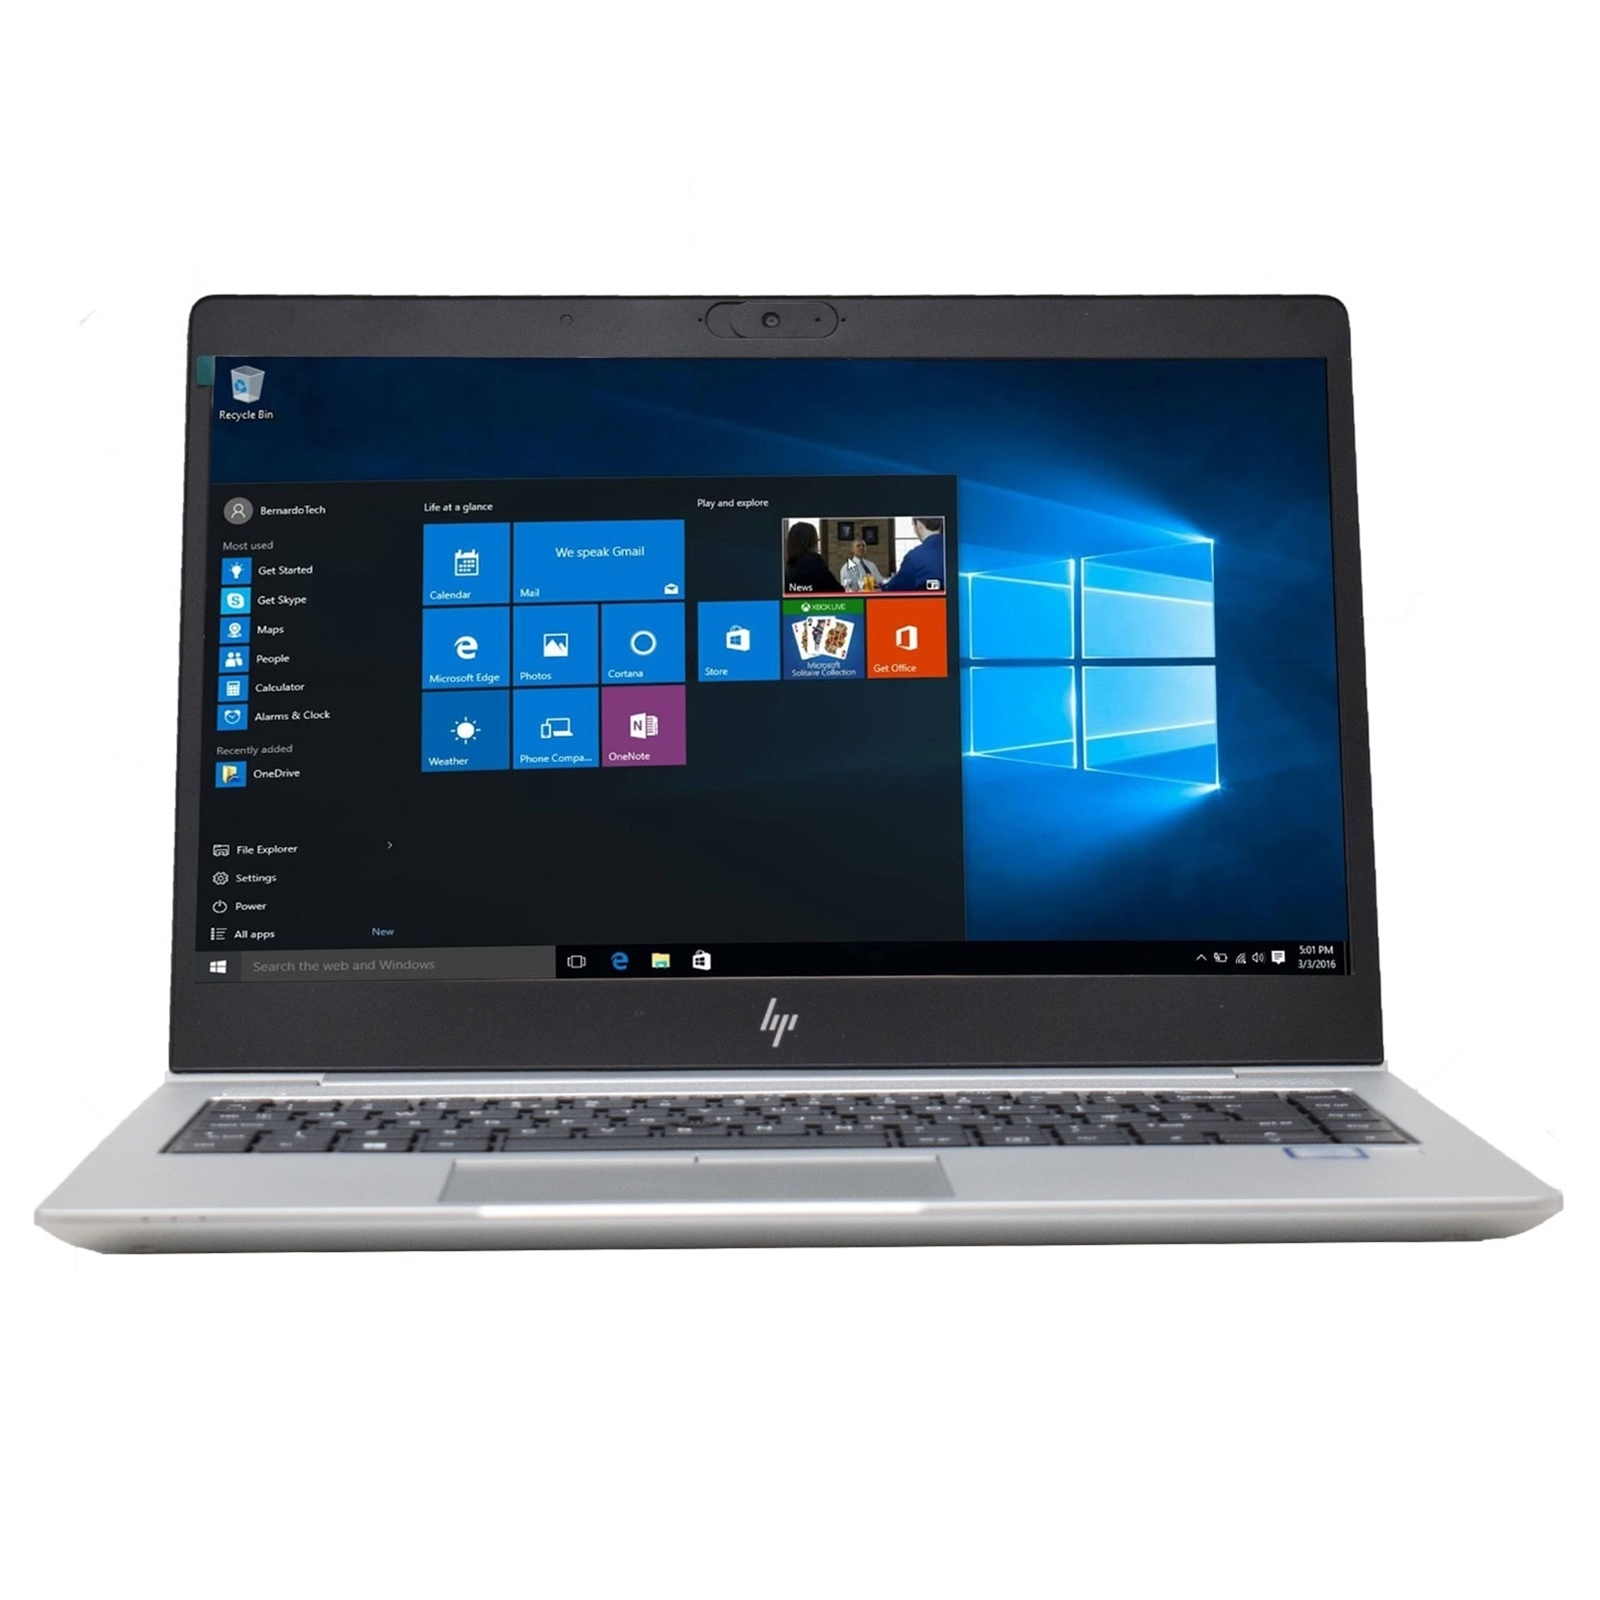 PREMIUM REFURBISHED HP EliteBook 840 G5 Intel Core i7 8th Gen Laptop, 14 Inch Full HD 1080p Screen, 16GB RAM, 512GB SSD, Windows 10 Pro